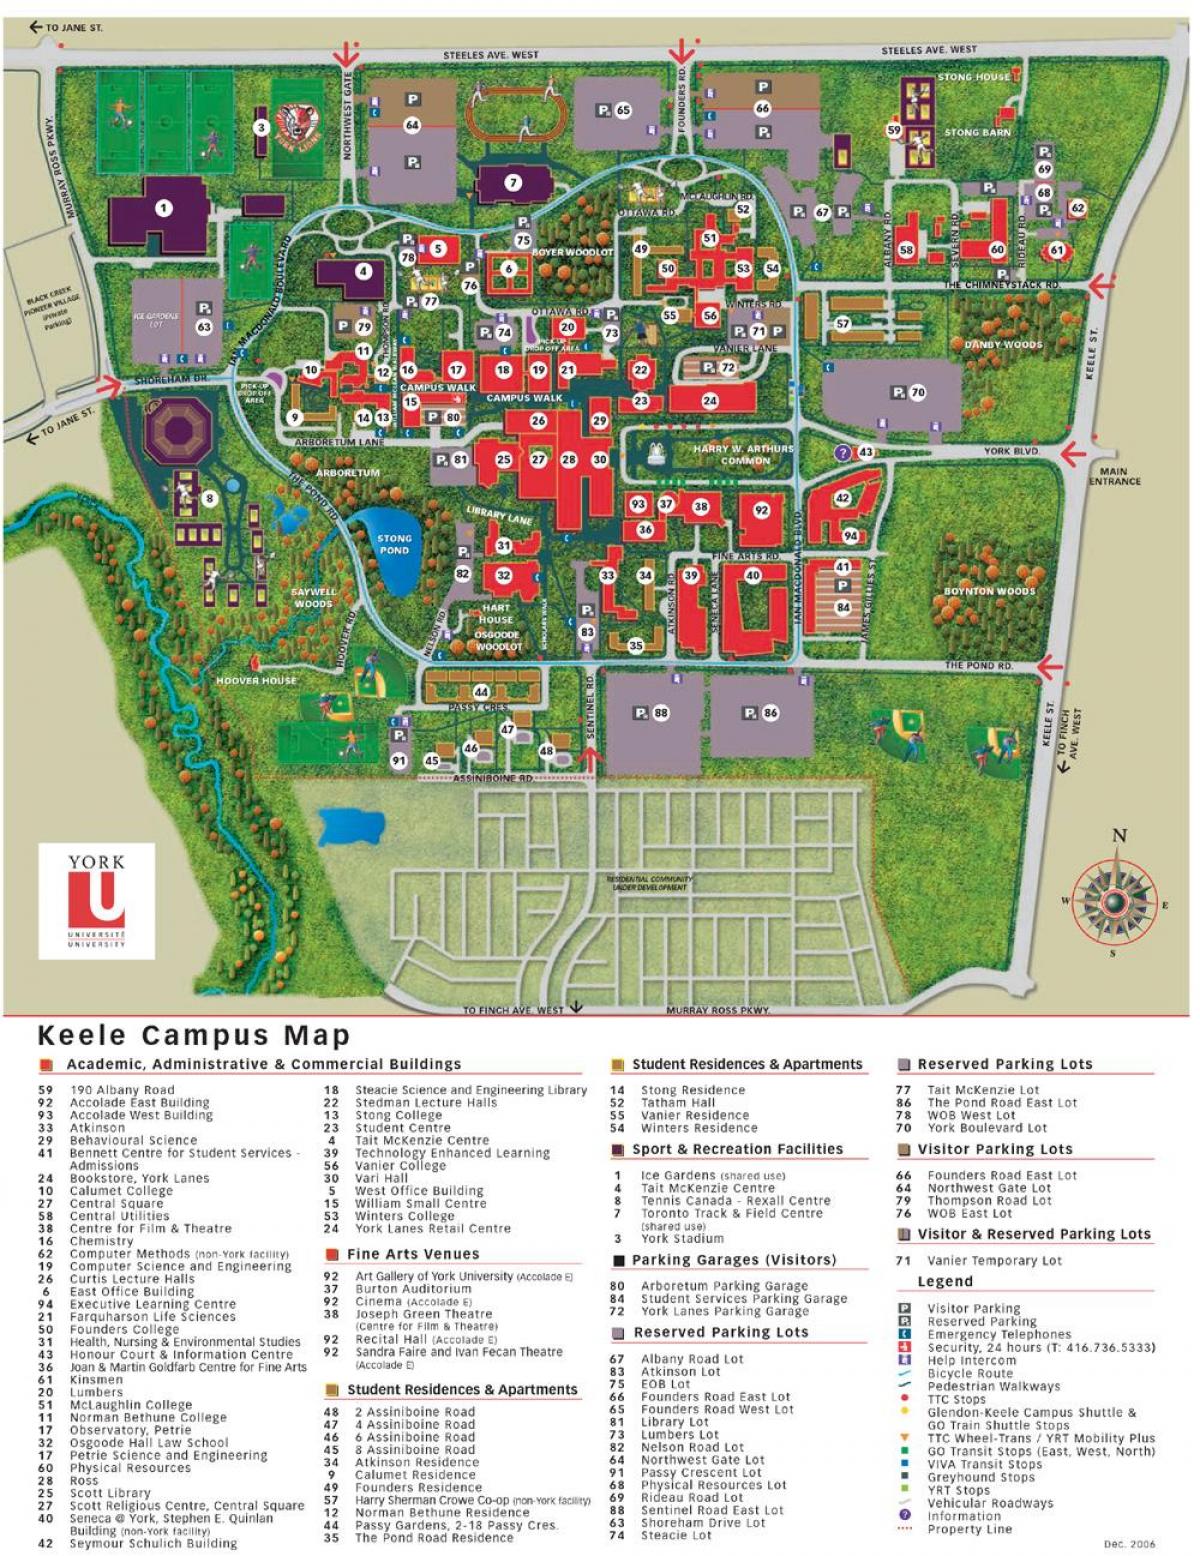 Map of York university keele campus